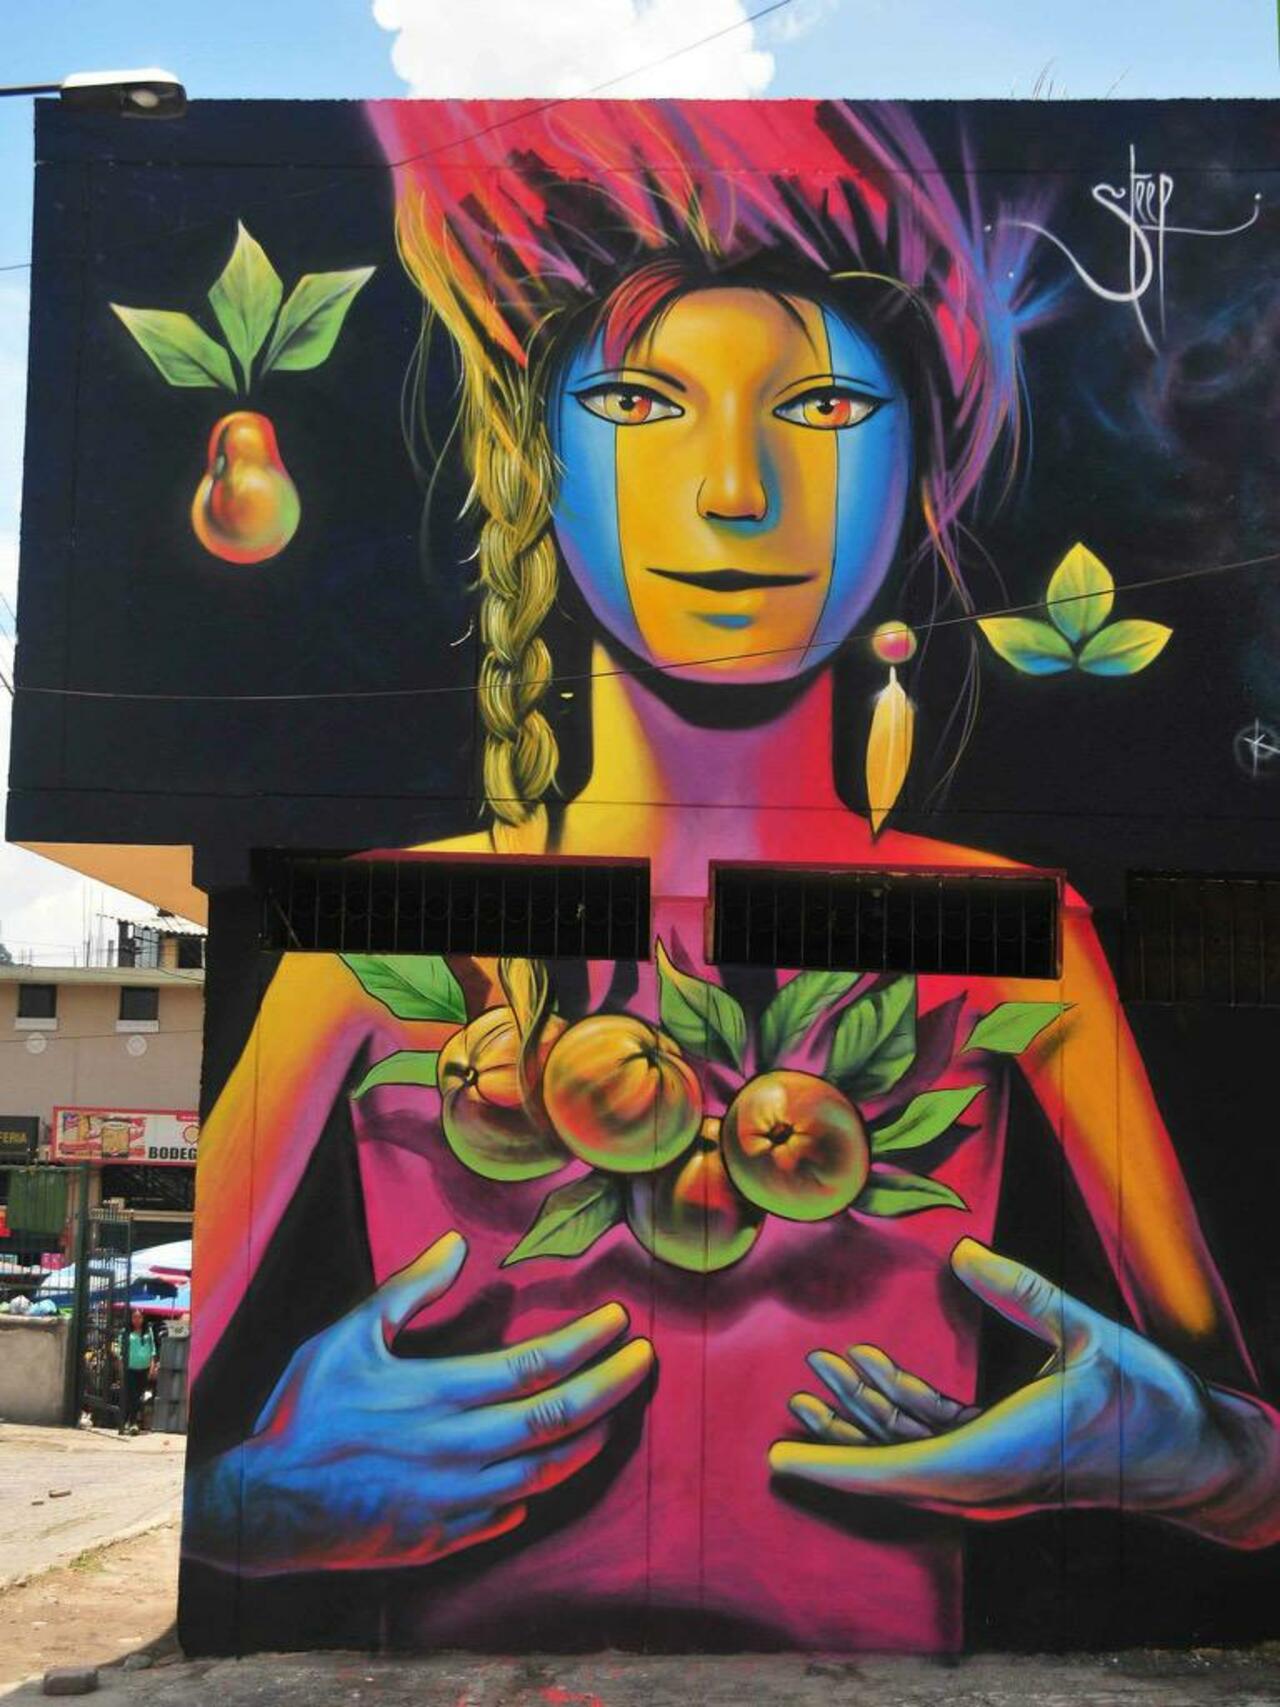 RT belilac "RT belilac "RT belilac "Street Art by Steep

#art #graffiti #mural #streetart http://t.co/geLfOtbr4c"""